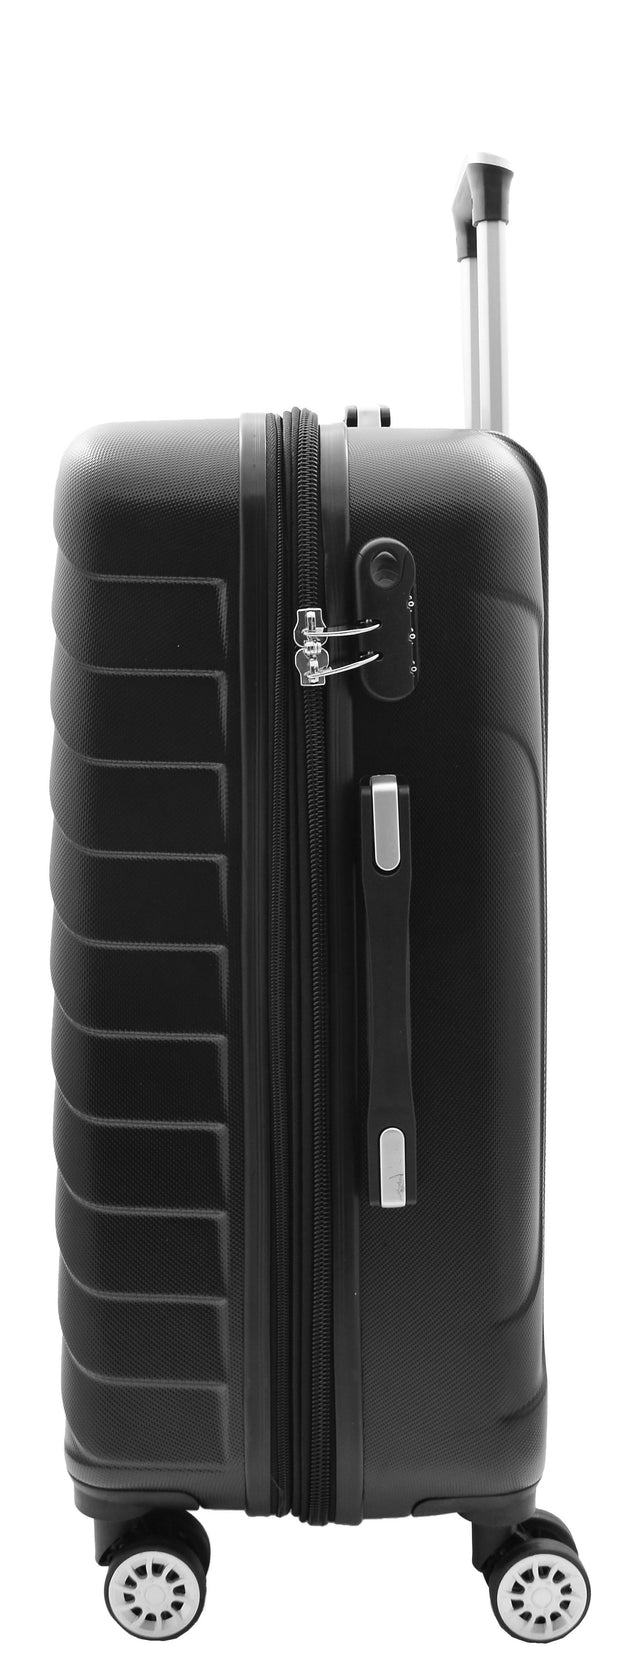 4 Wheel Suitcases Hard Shell Black ABS Digit Lock Lightweight Luggage Travel Bag Melton medium-2